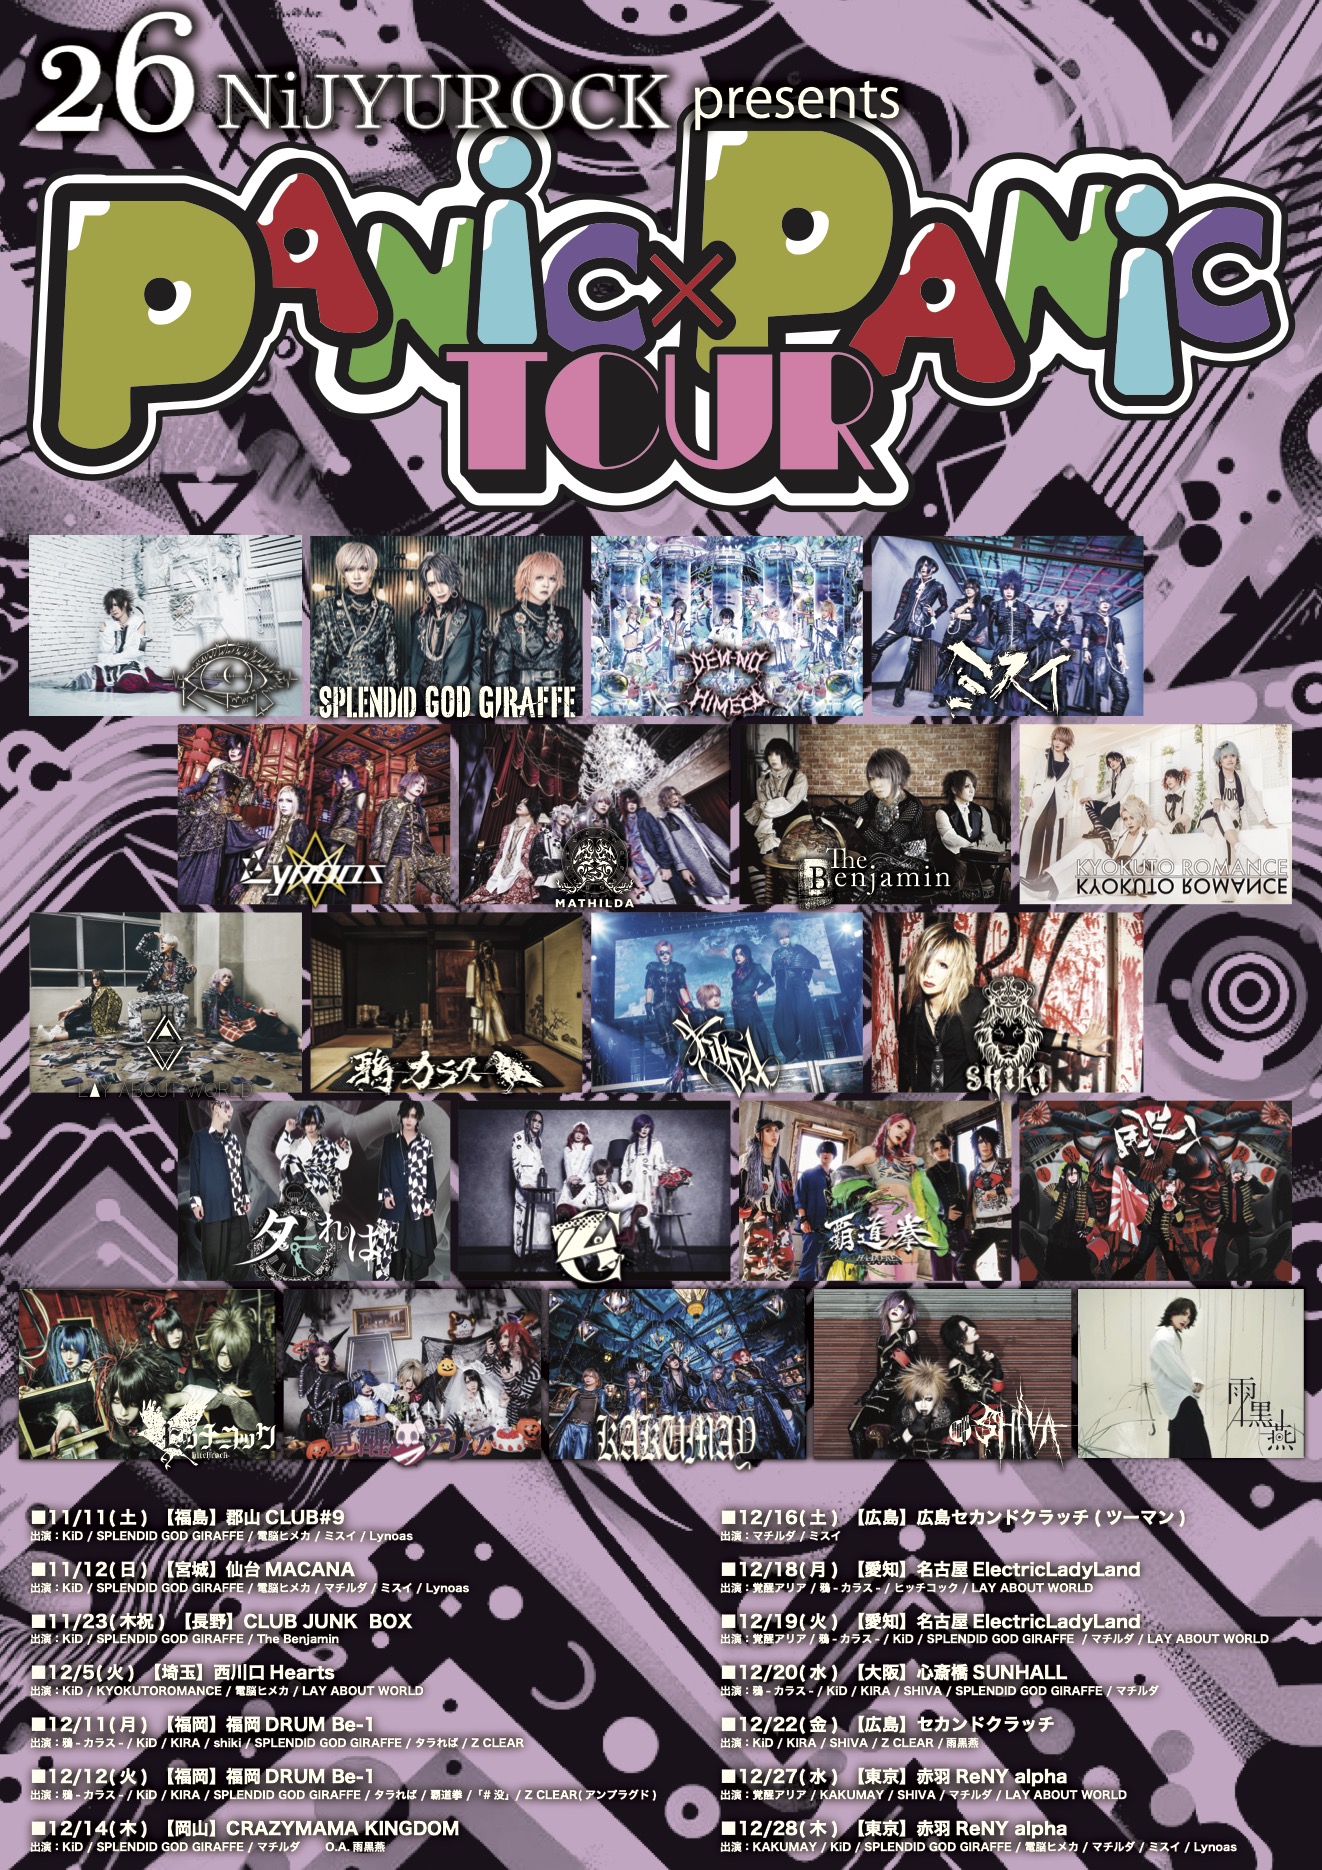 【岡山】26 NiJYUROCK presents PANiC×PANiC TOUR